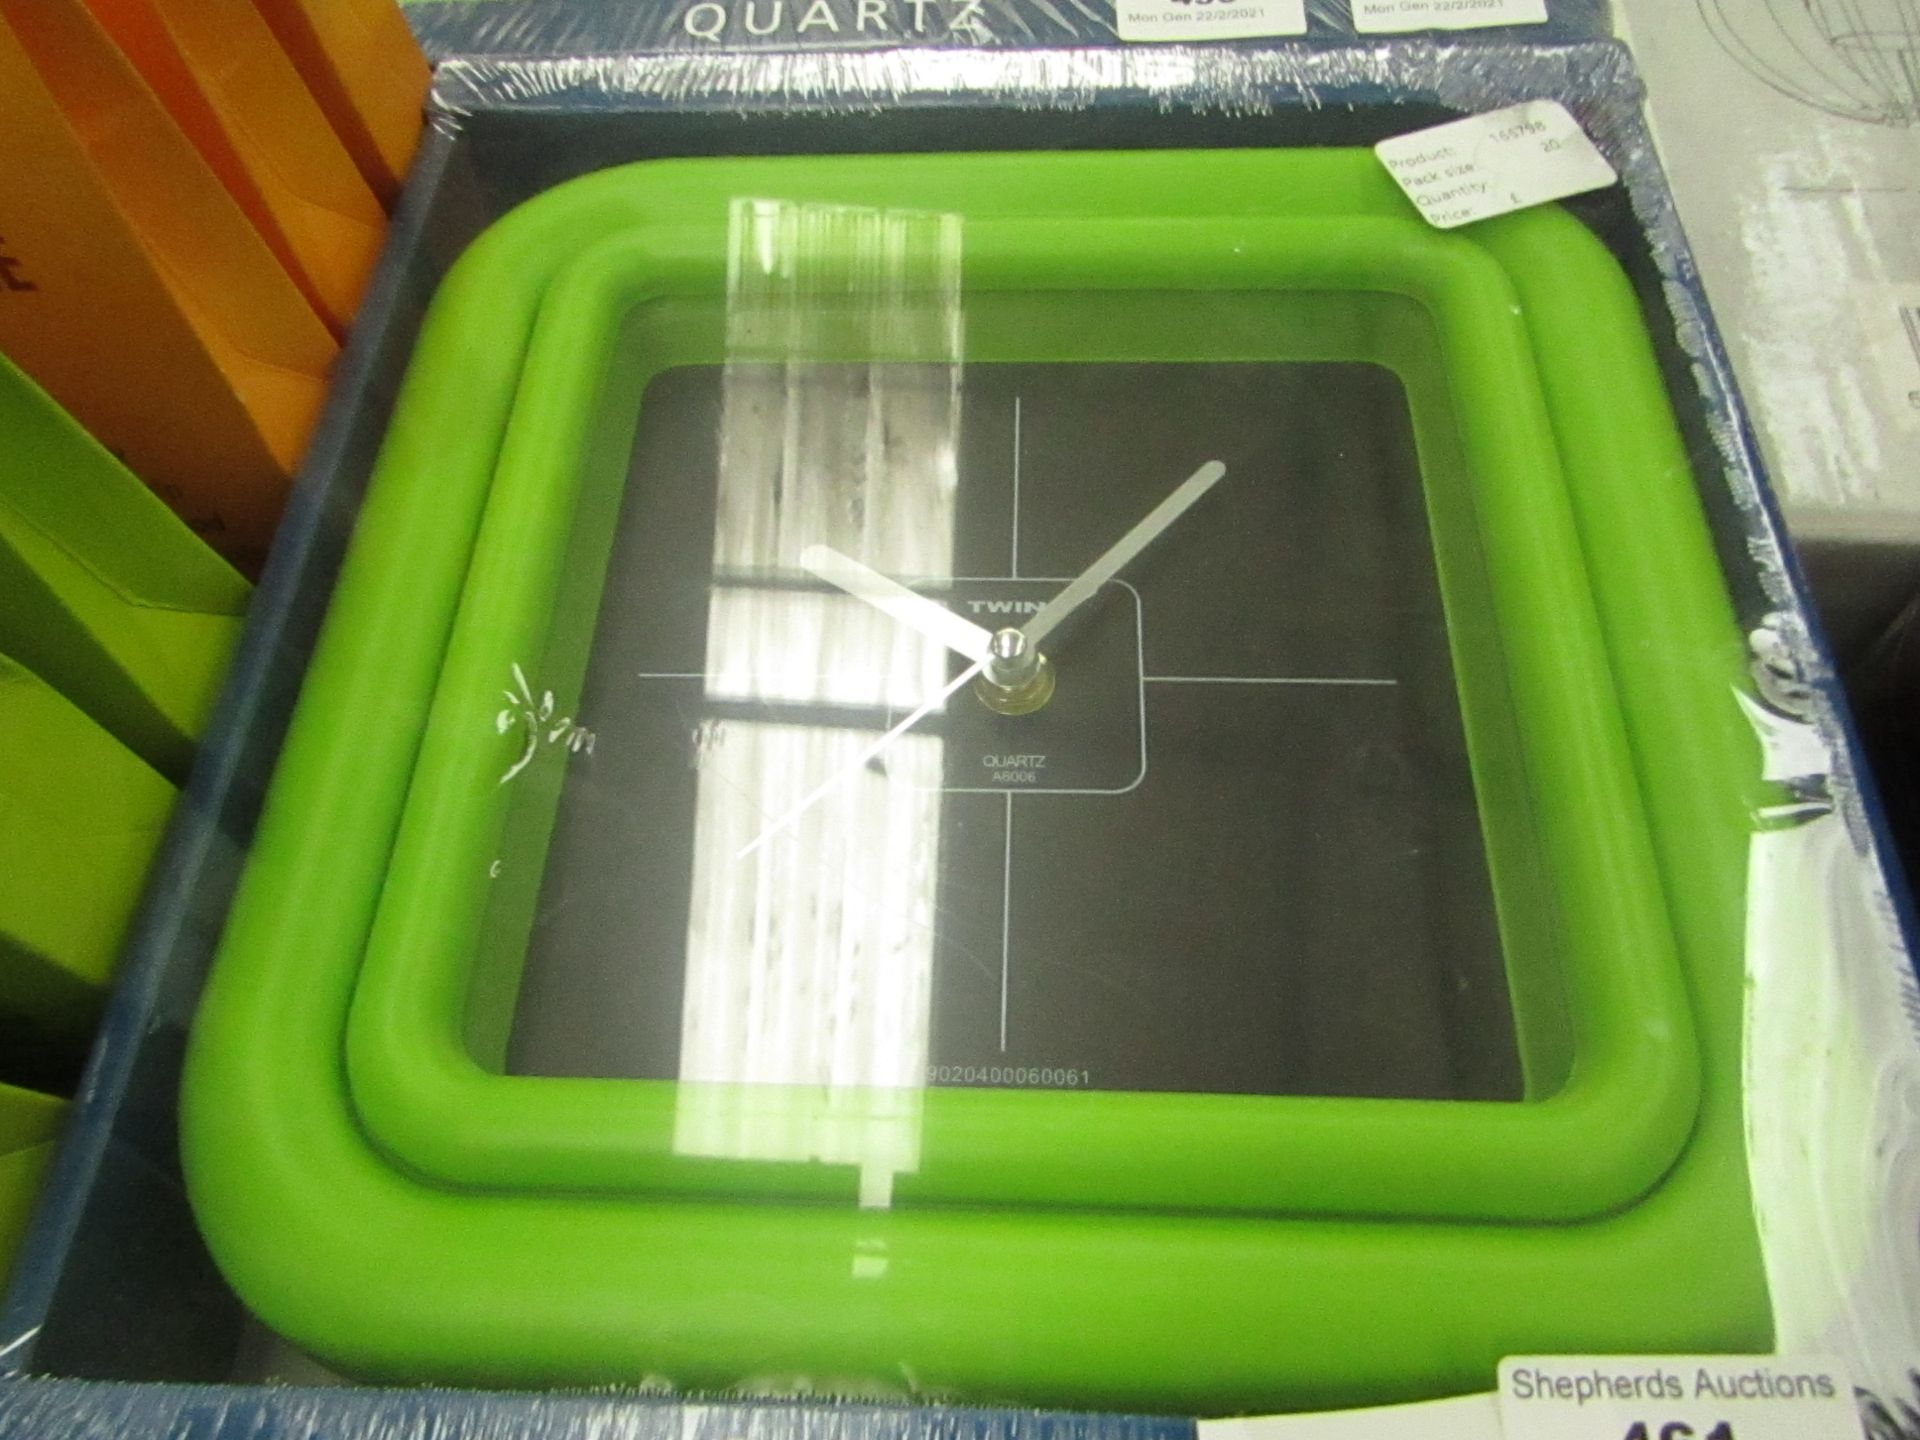 Twins Quartz - Small Green Clock - Unused & Packaged.